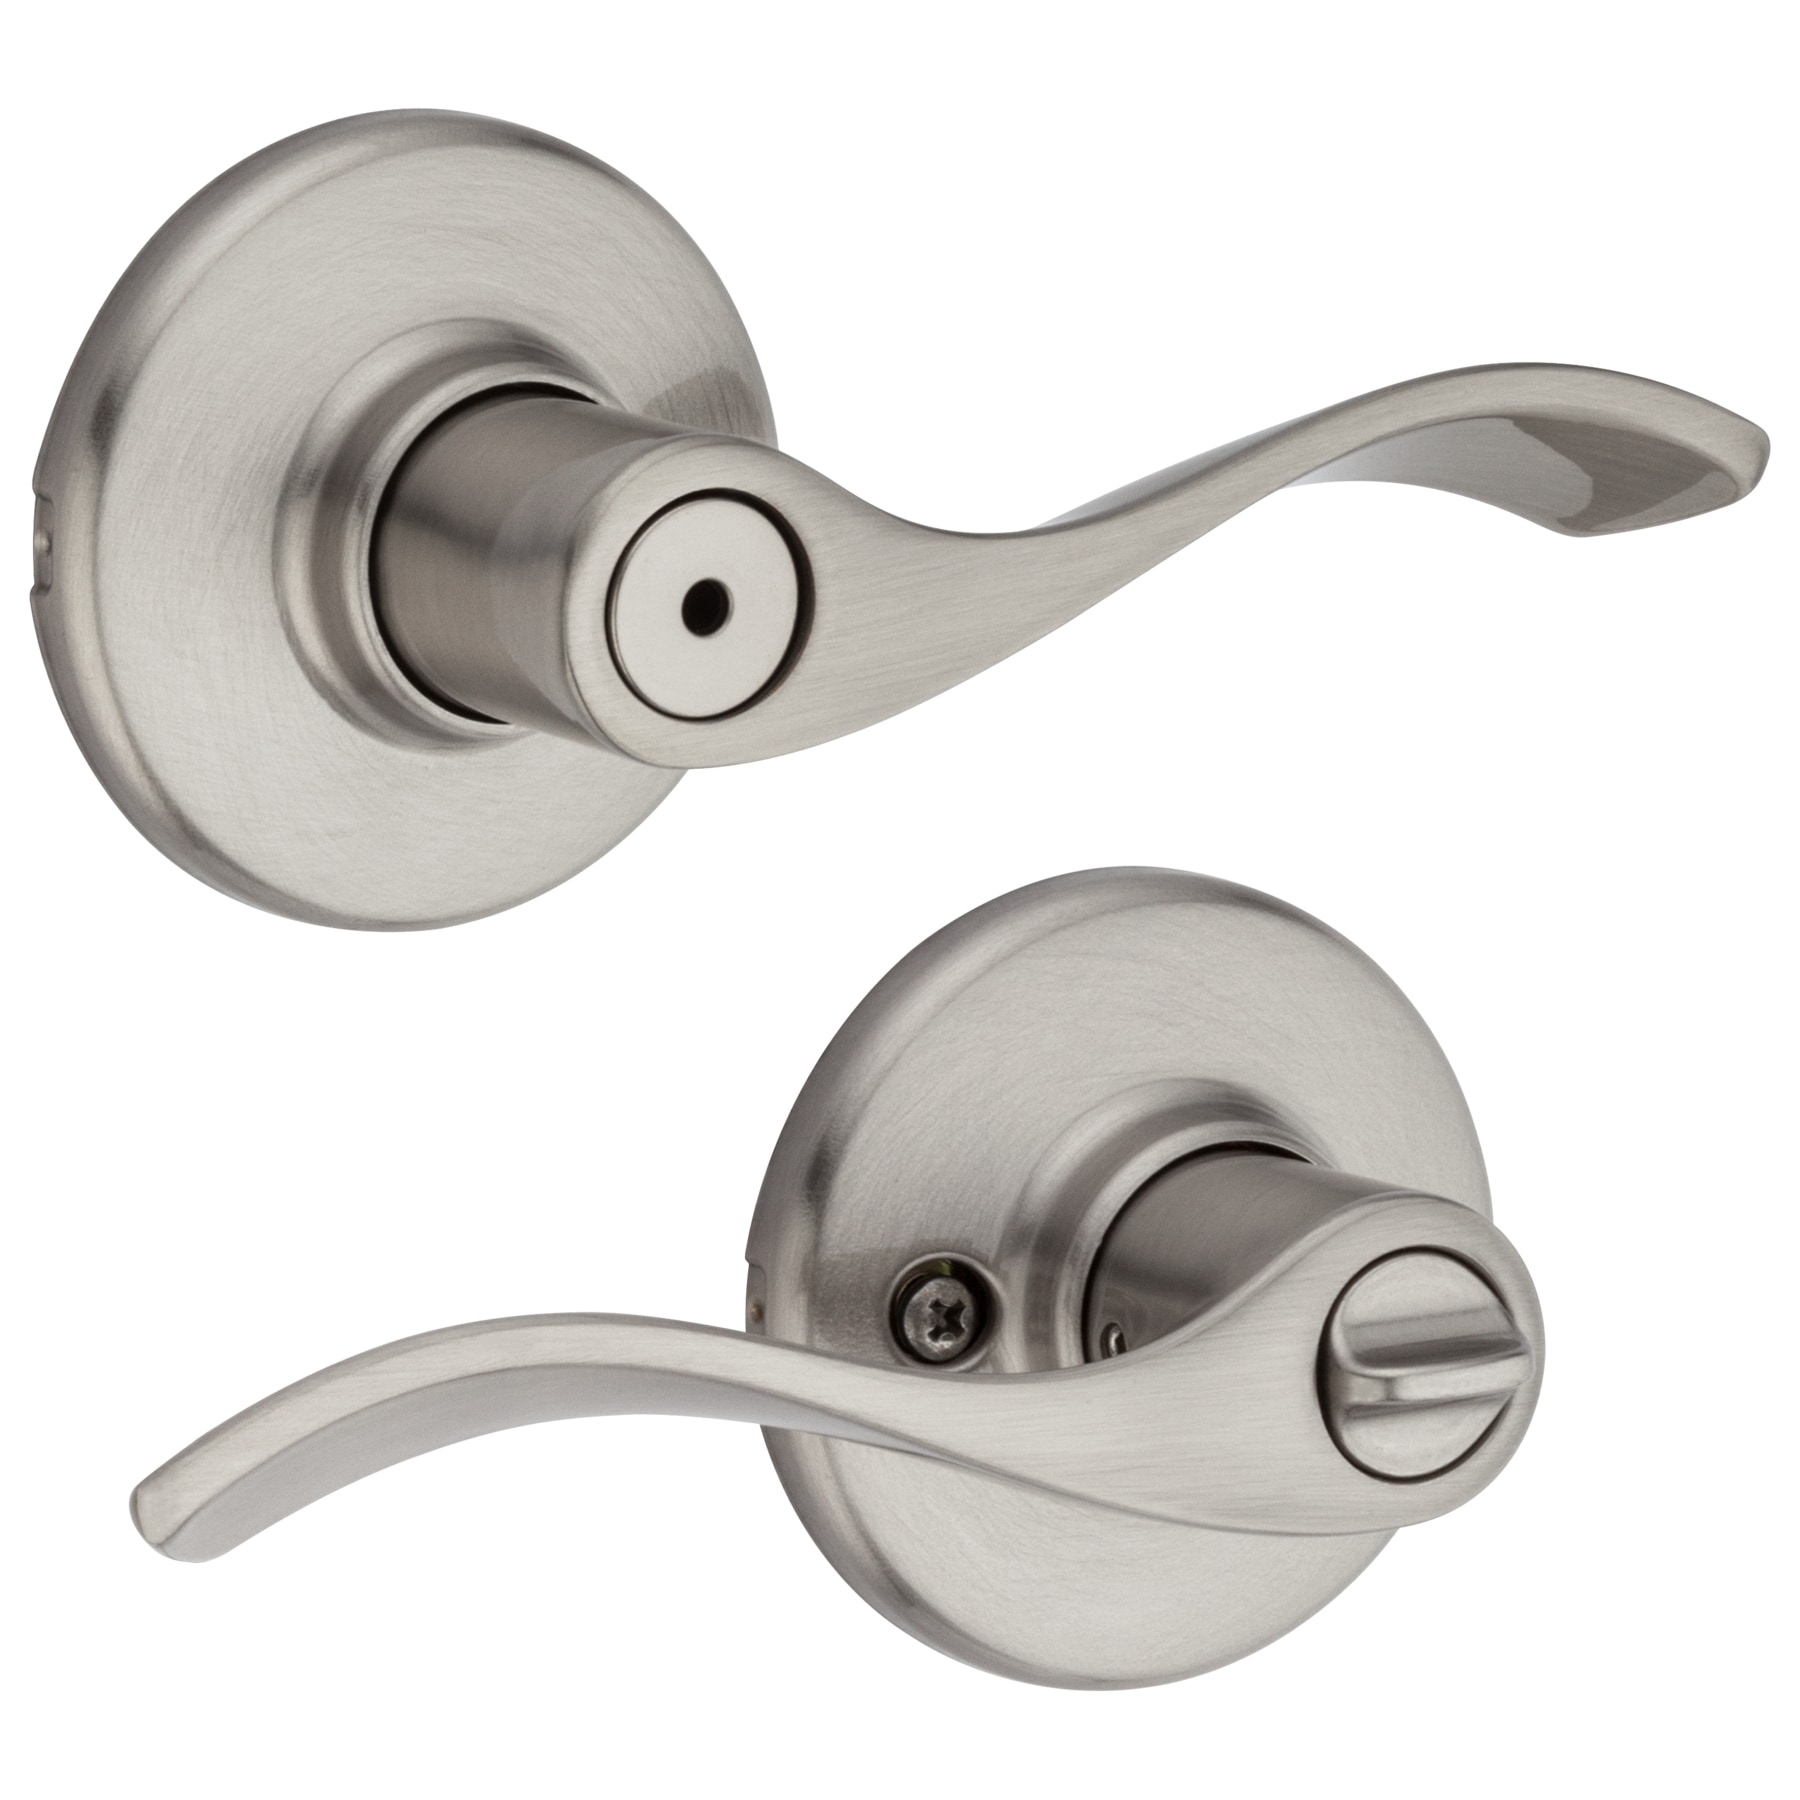 Privacy Satin Nickel Lever Handle Door Locks Knobs for bedroom and bathroom 